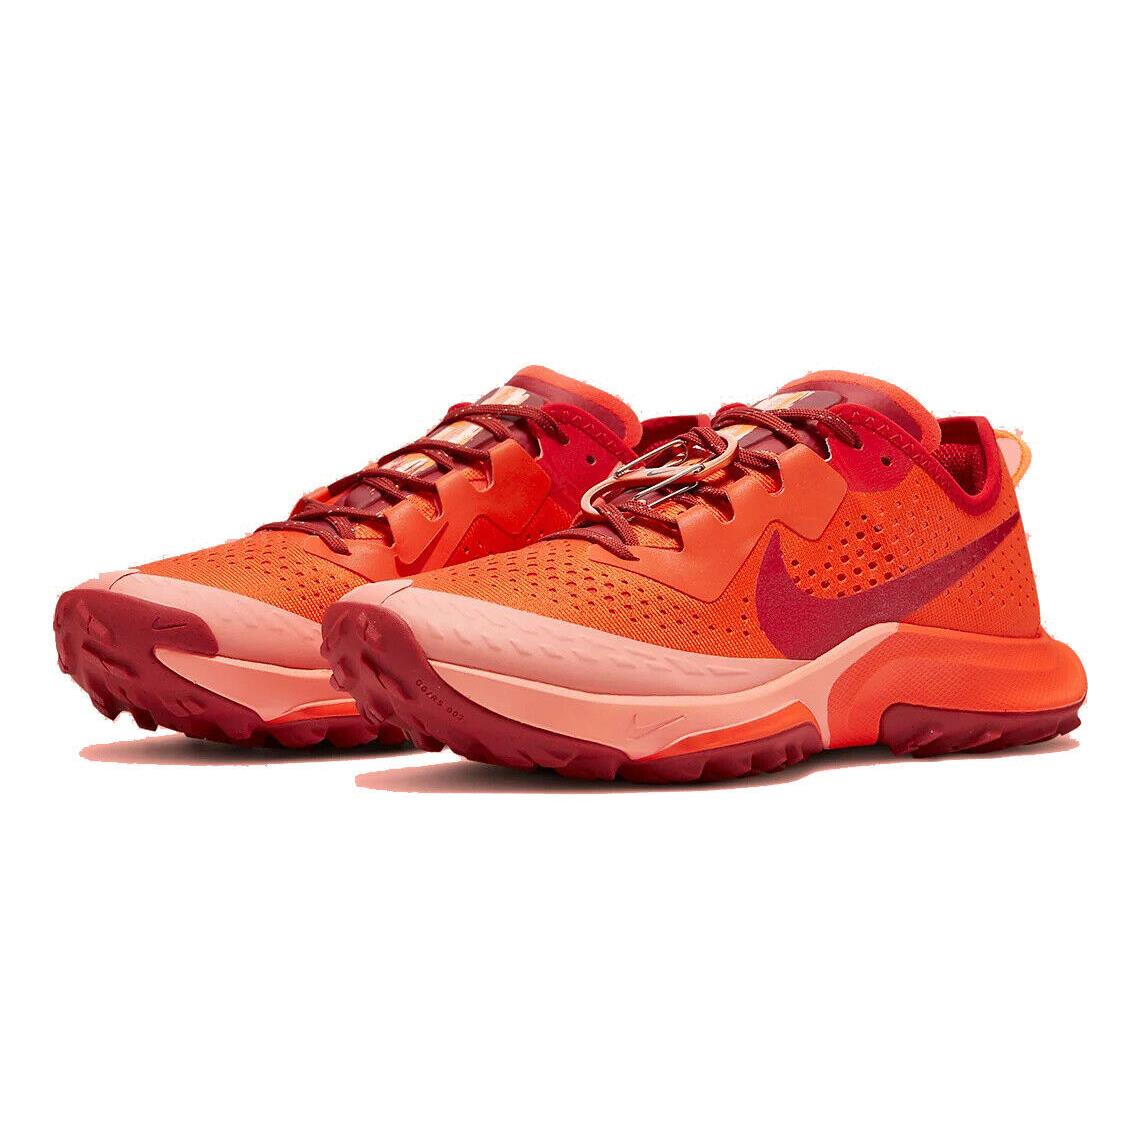 Nike Air Zoom Terra Kiger 7 Womens Size 7 Sneaker Shoes DM9469 800 Orange